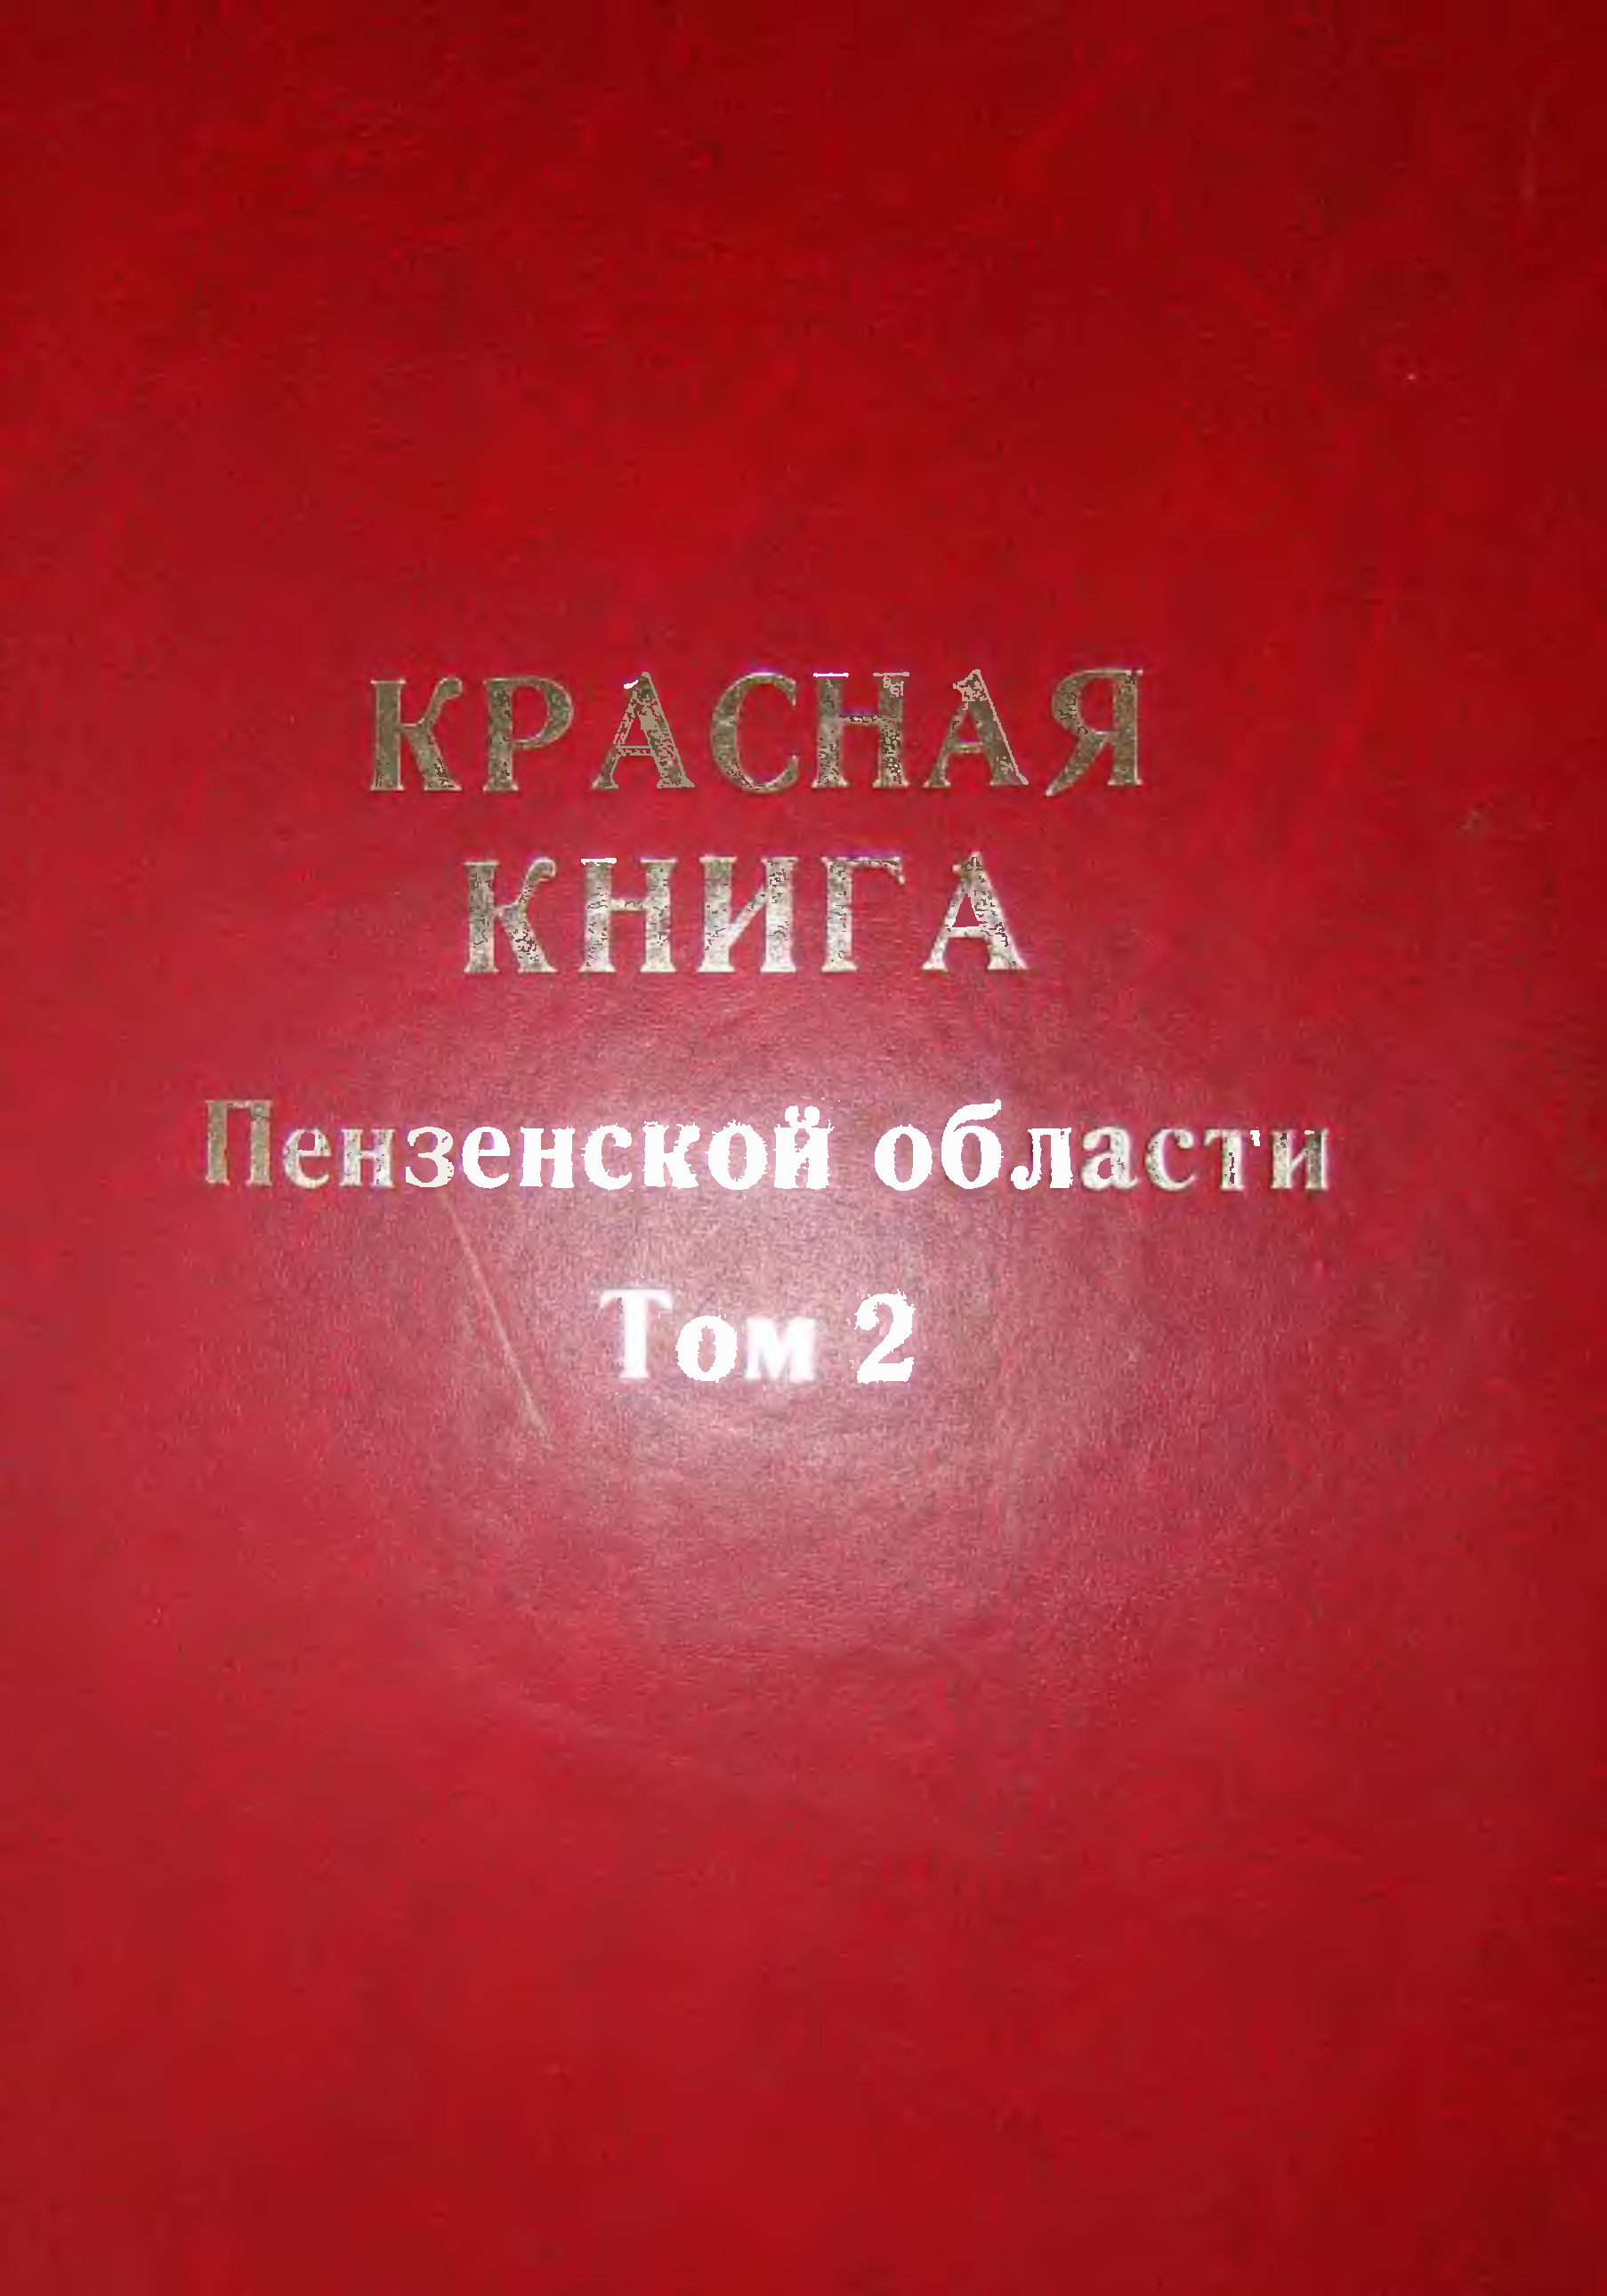 Красная страна книга